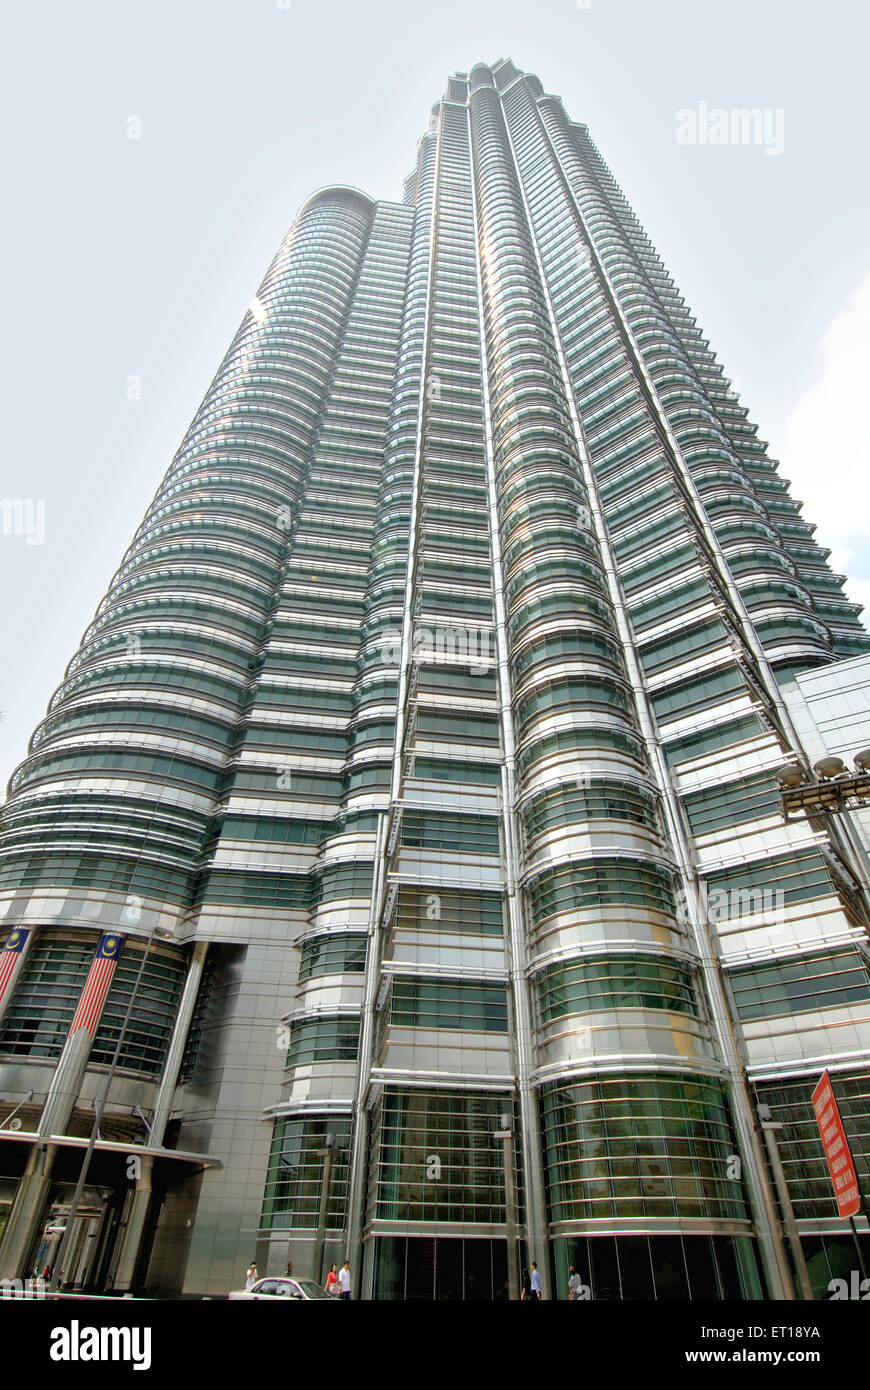 Petronas klcc twin towers ; Kuala Lumpur ; Malaysia Stock Photo